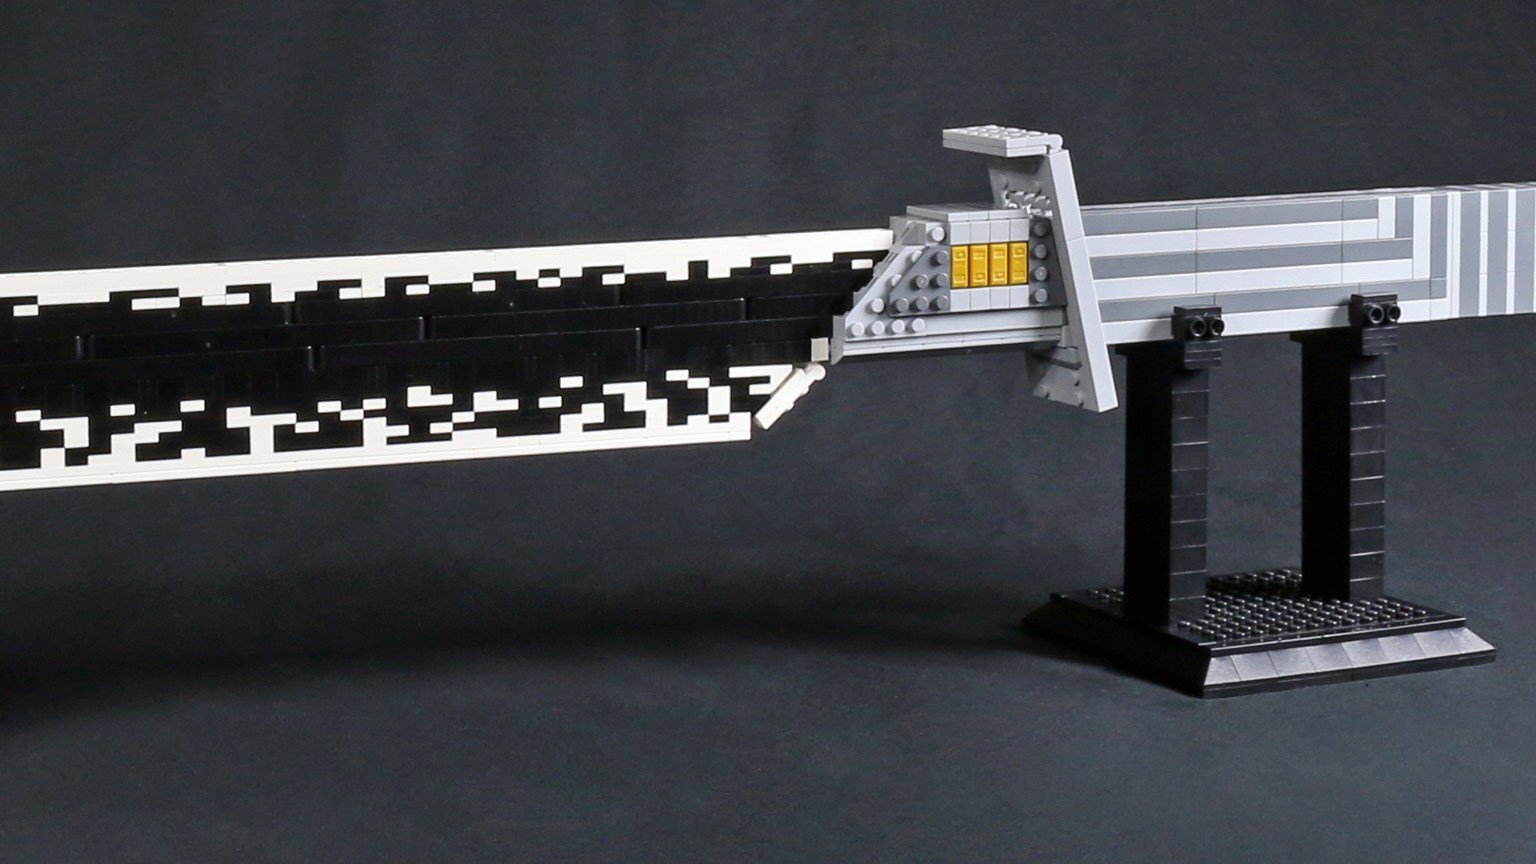 Most Impressive Fans: How Taylor Walker Built an Amazing, Homemade LEGO Darksaber